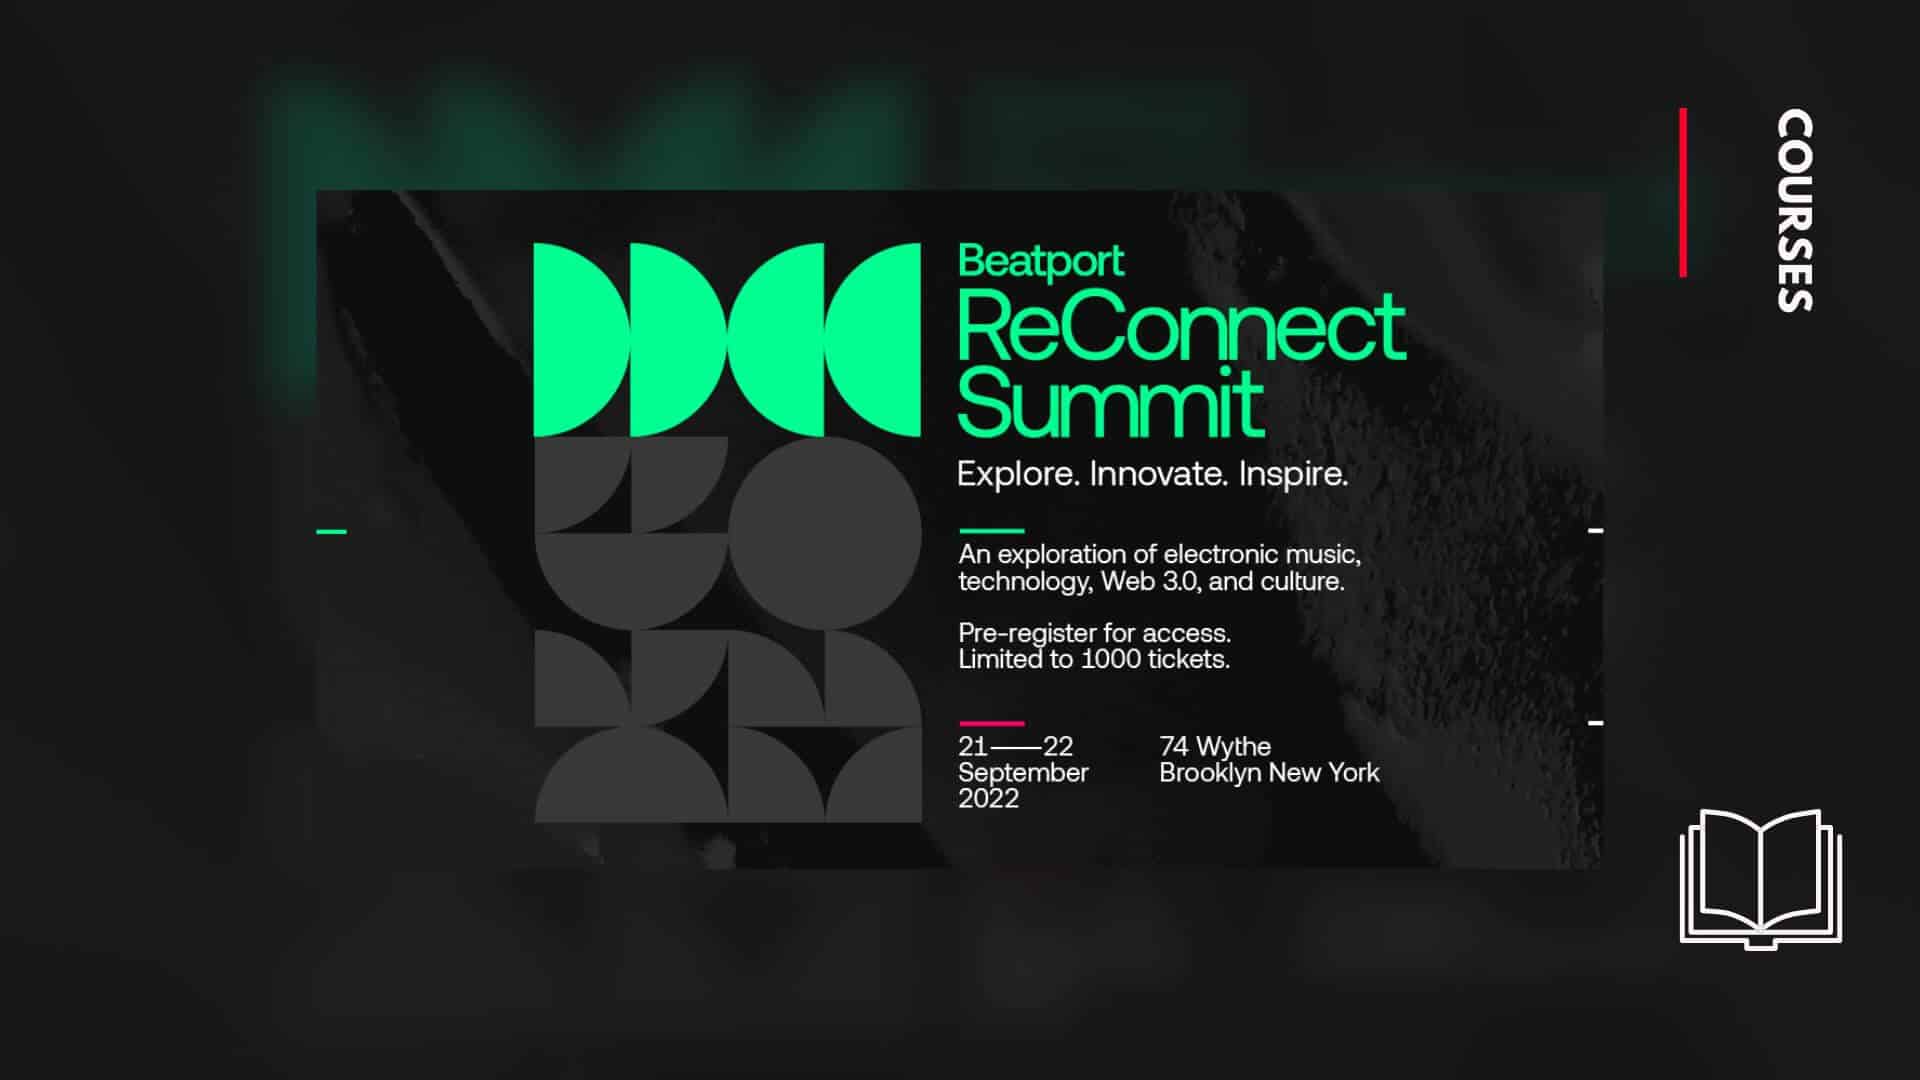 Beatport ReConnect summit announces deadmau5 and Eris Drew